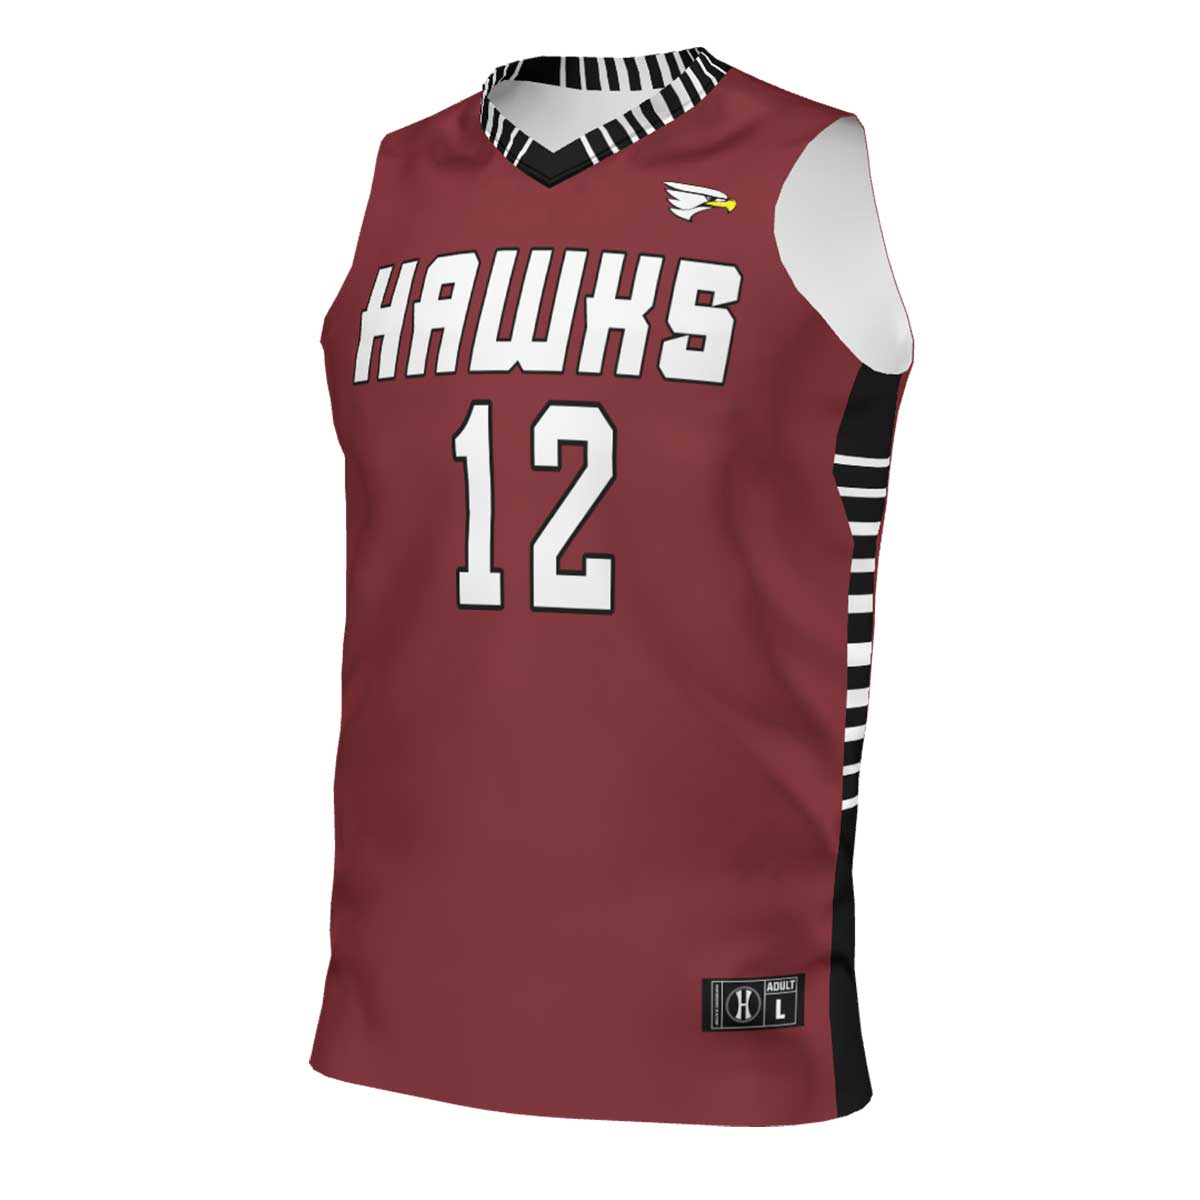 Hawks Basketball Jersey